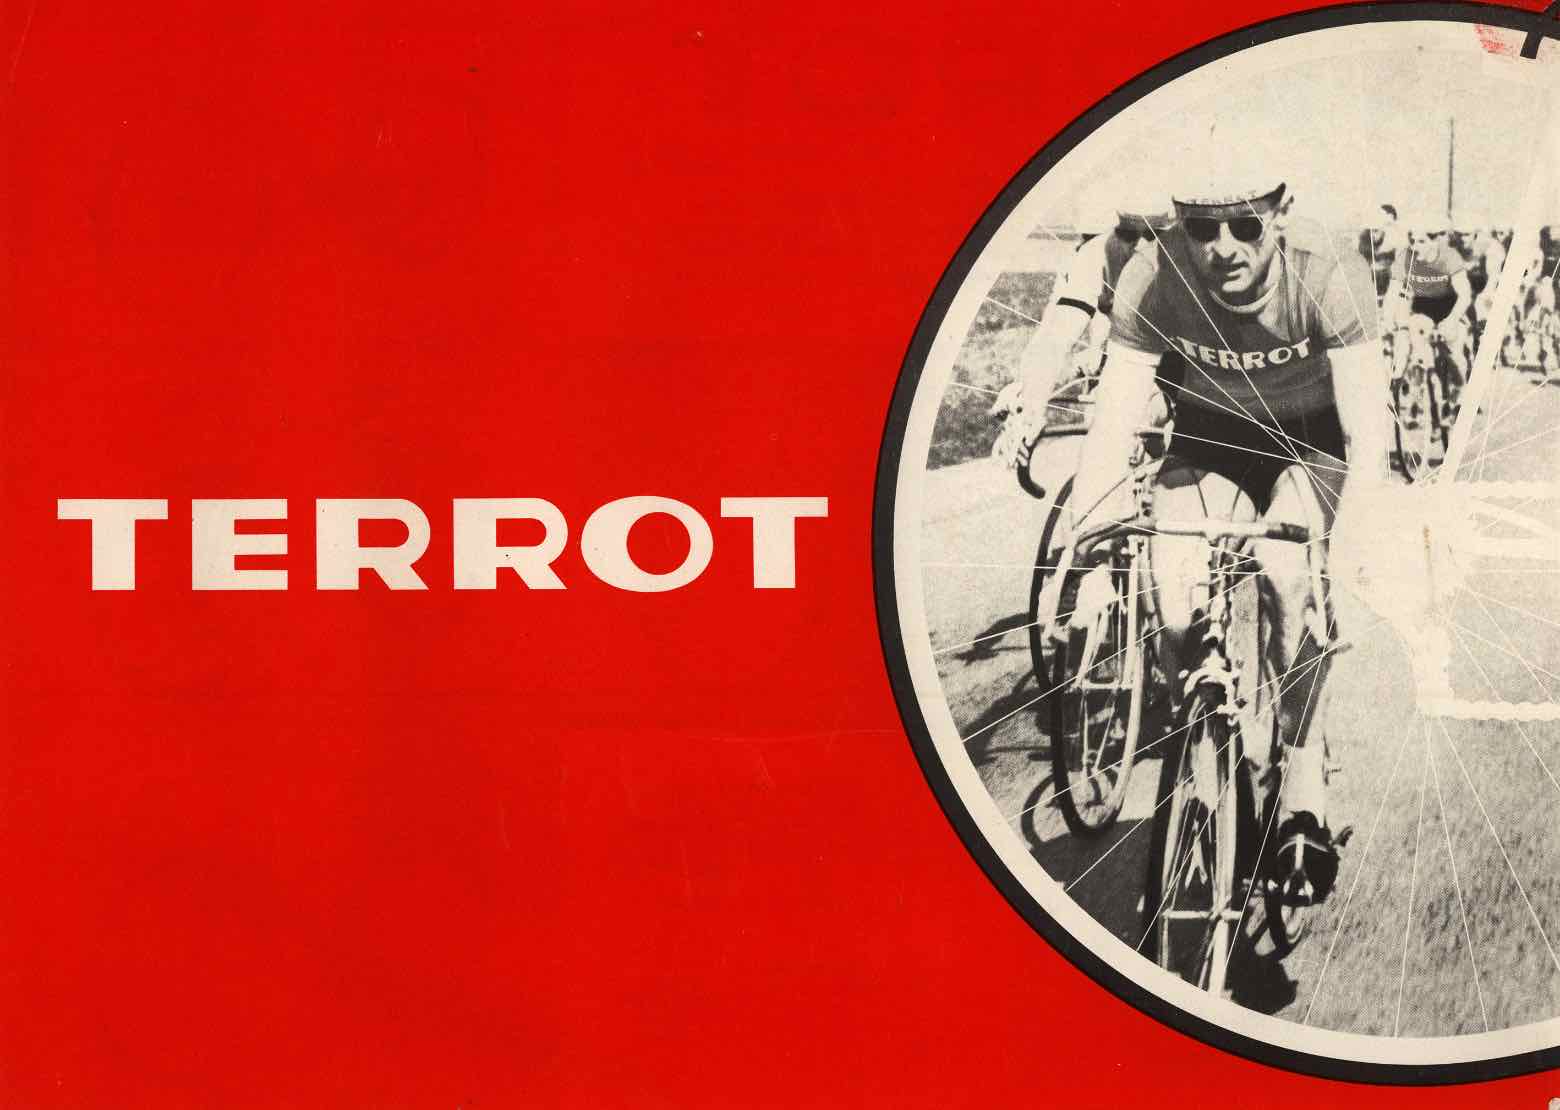 Terrot - catalogue 1963 scan 1 main image